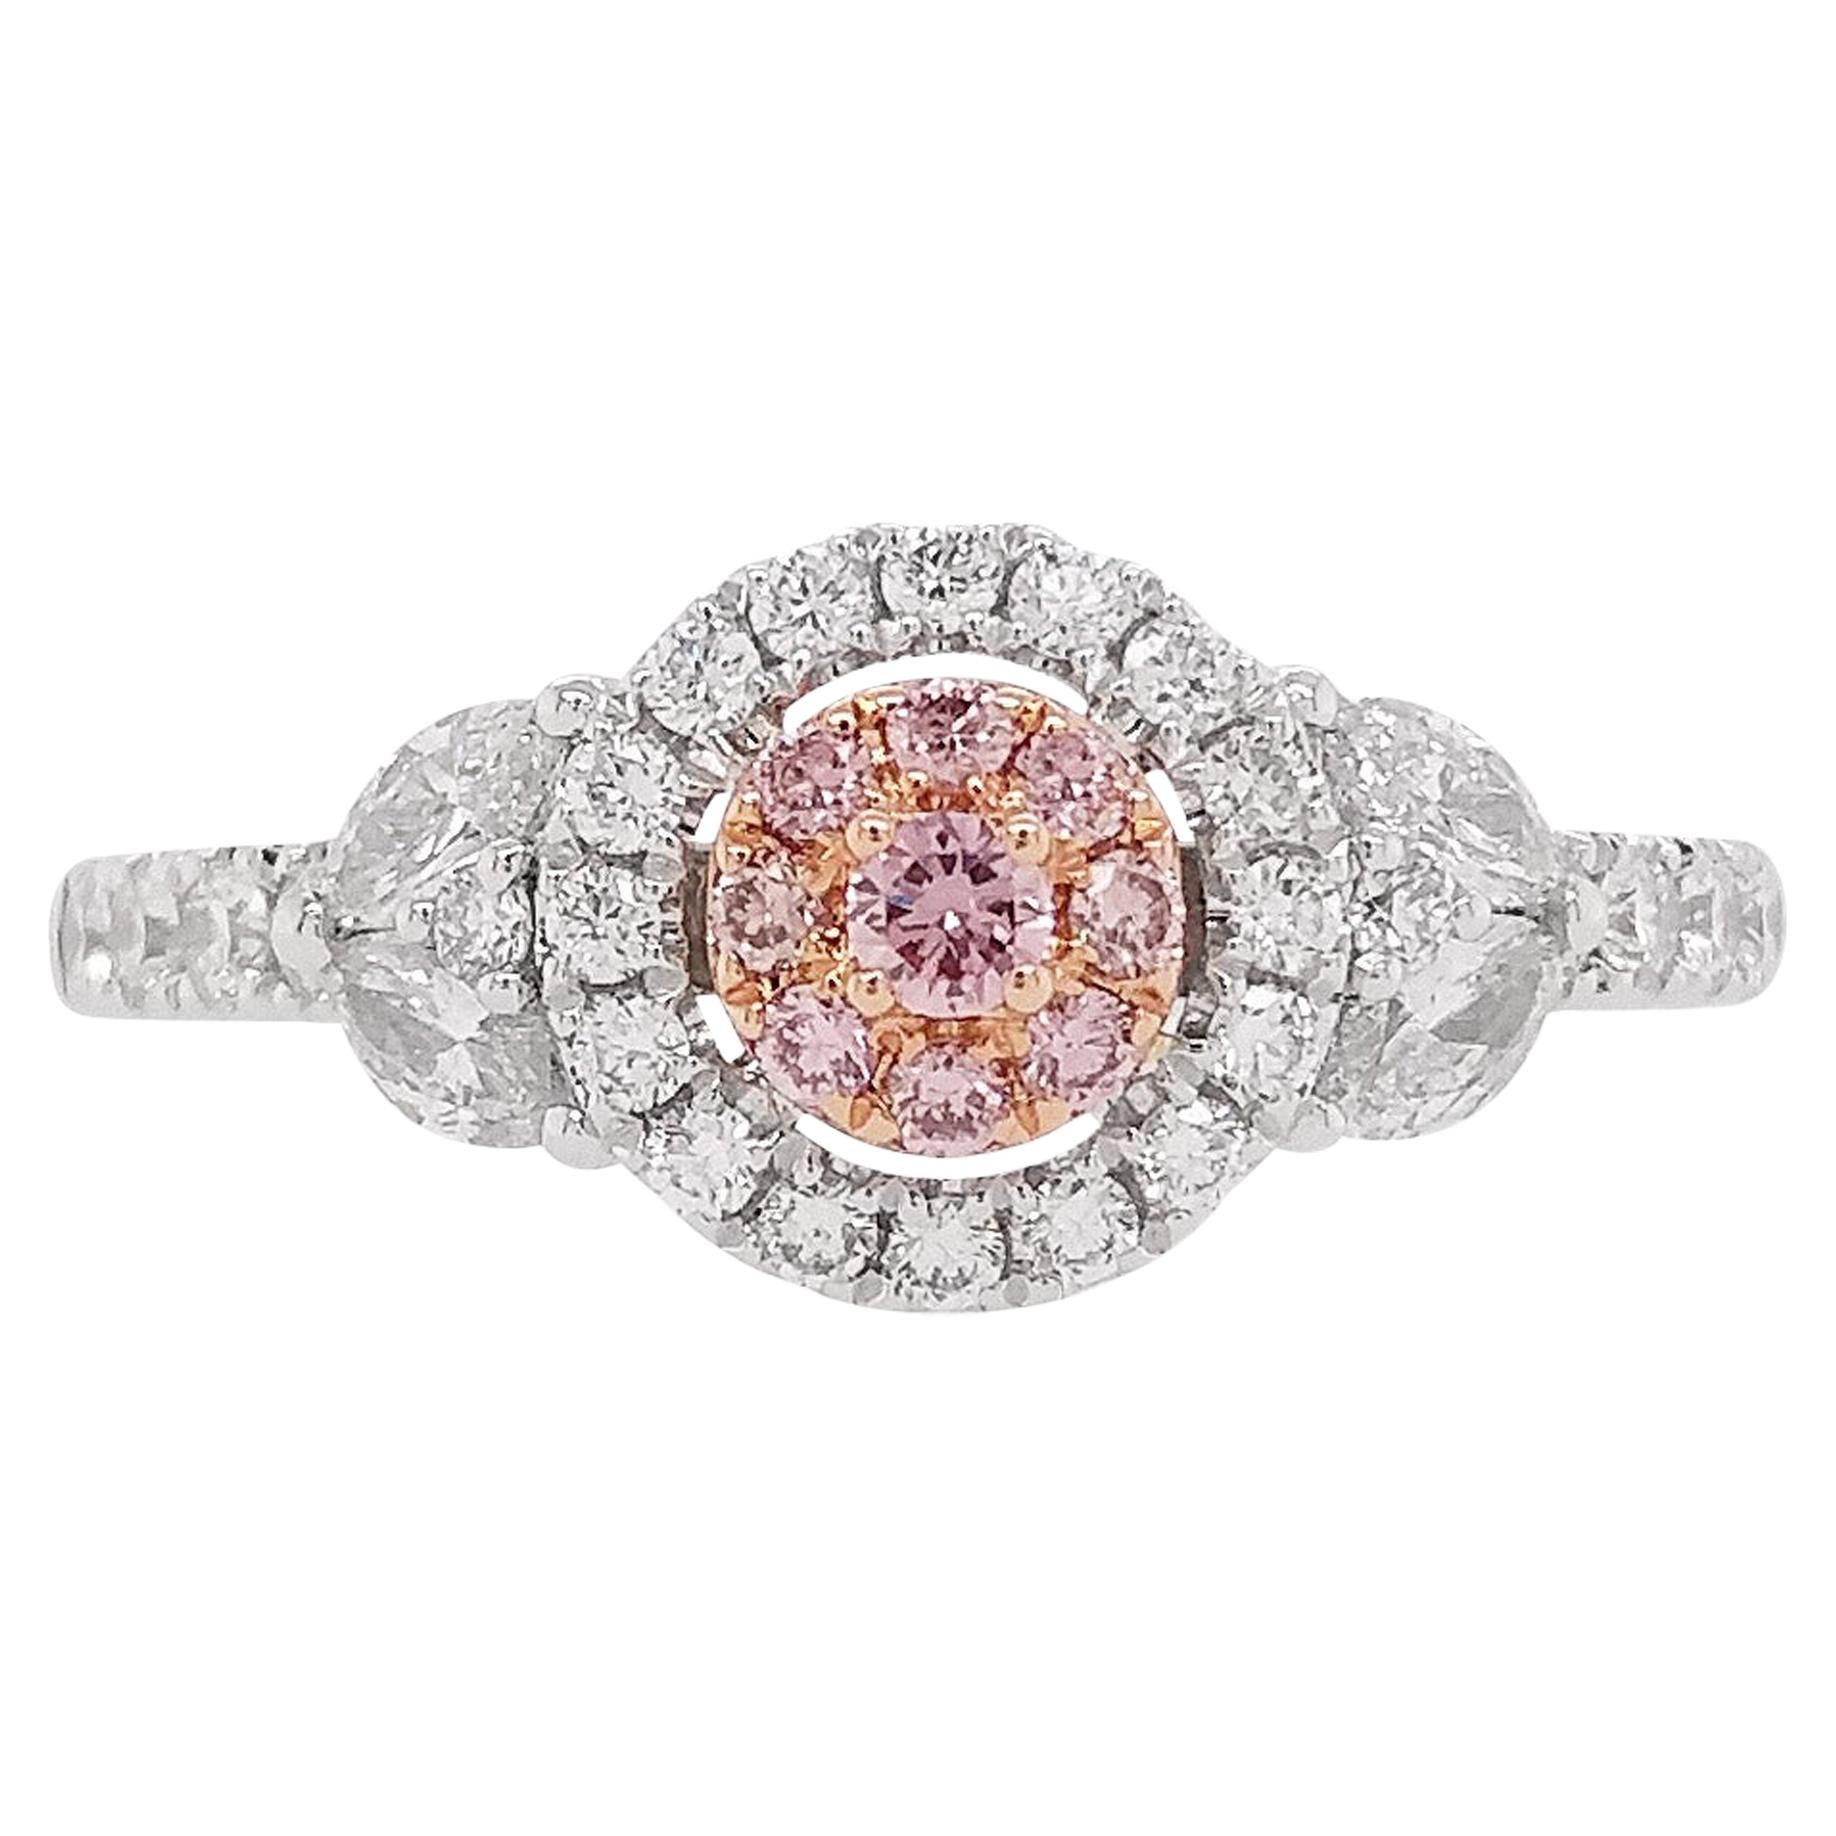 Natural Argyle Pink Diamond in Platinum and 18K Pink Gold Wedding Ring